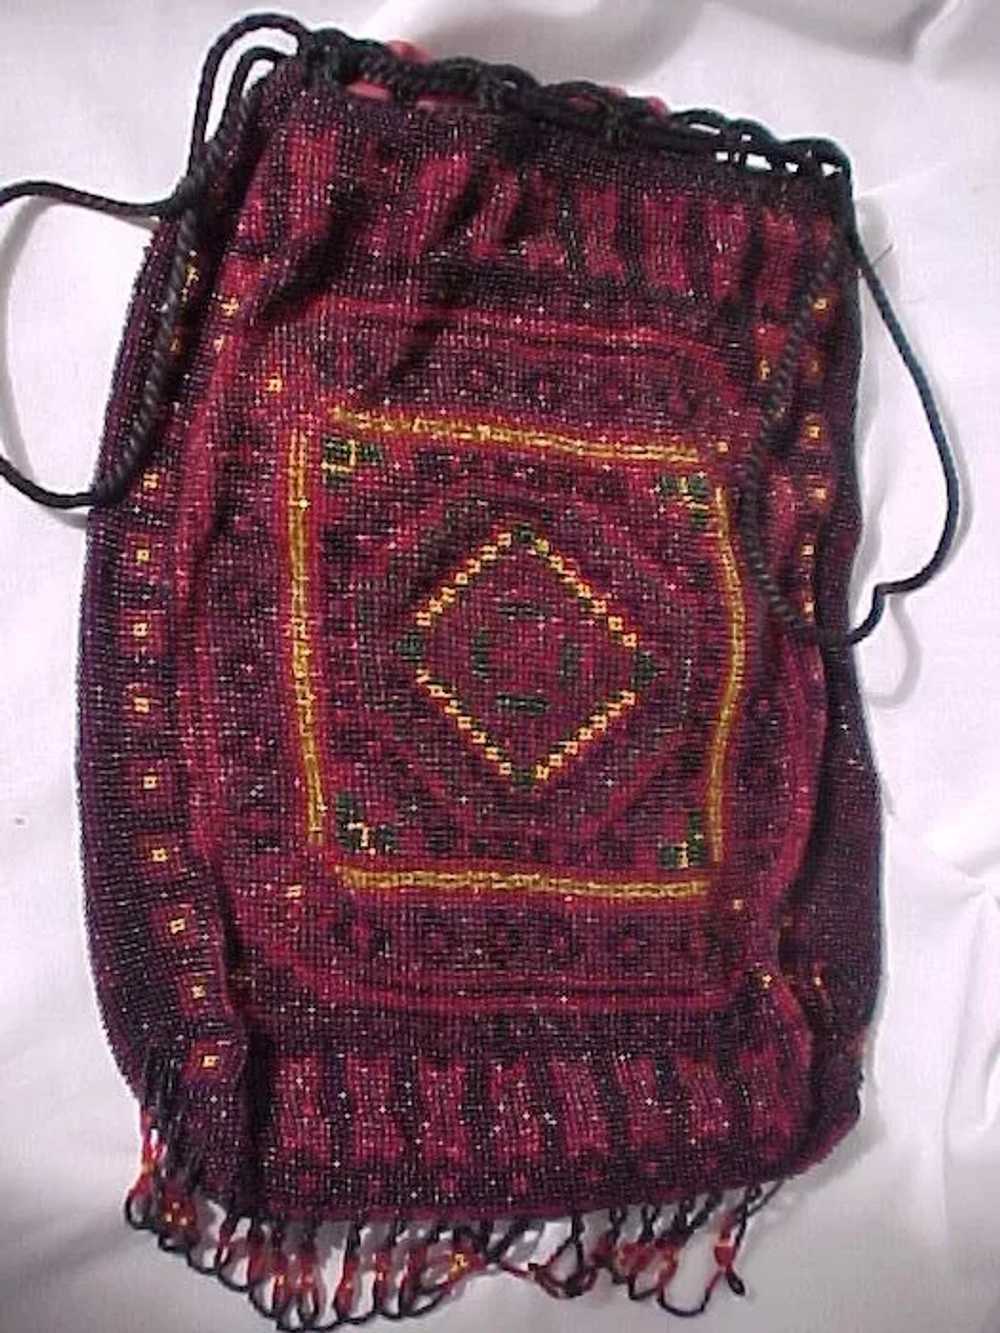 Beaded Bag with Indian Motif - image 1